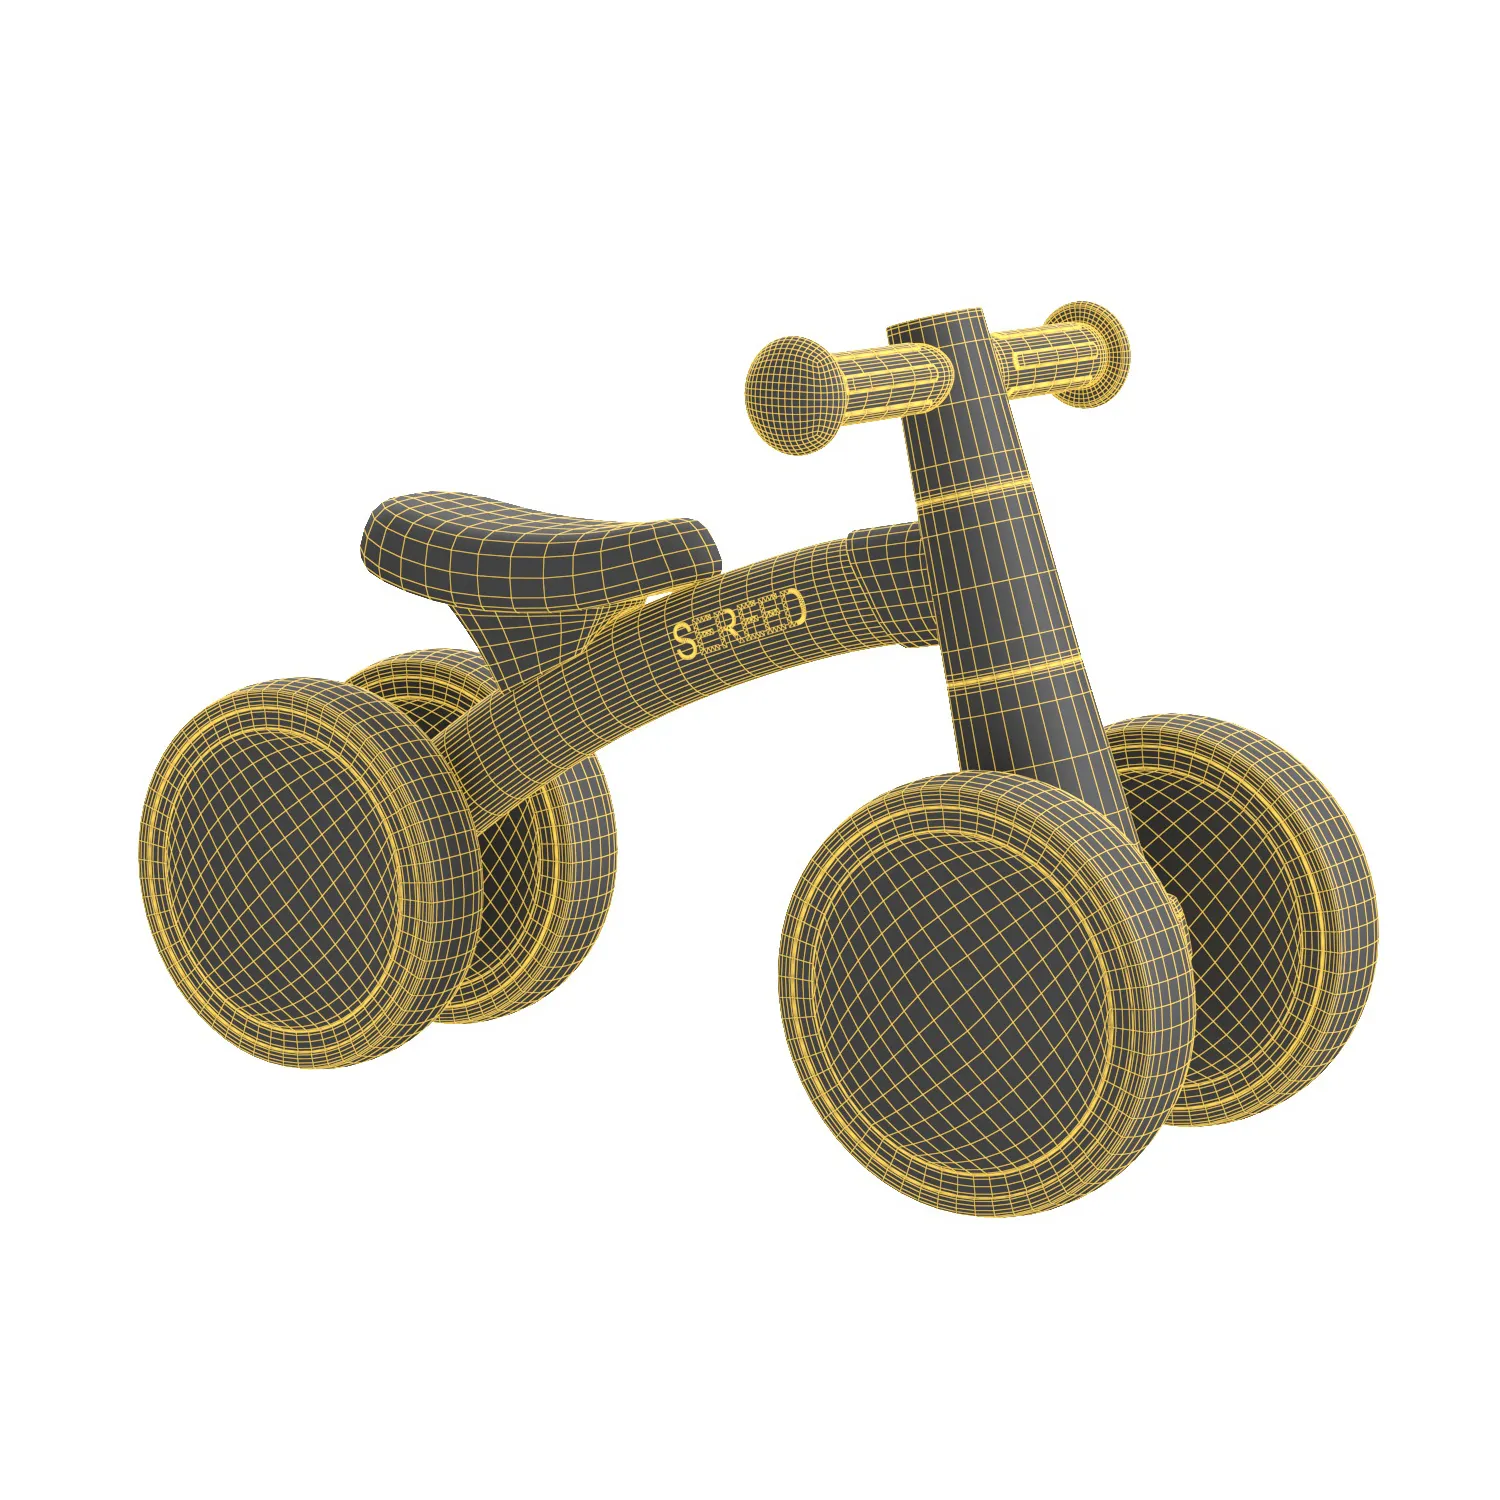 Sereed Baby Balance Bike PBR 3D Model_07